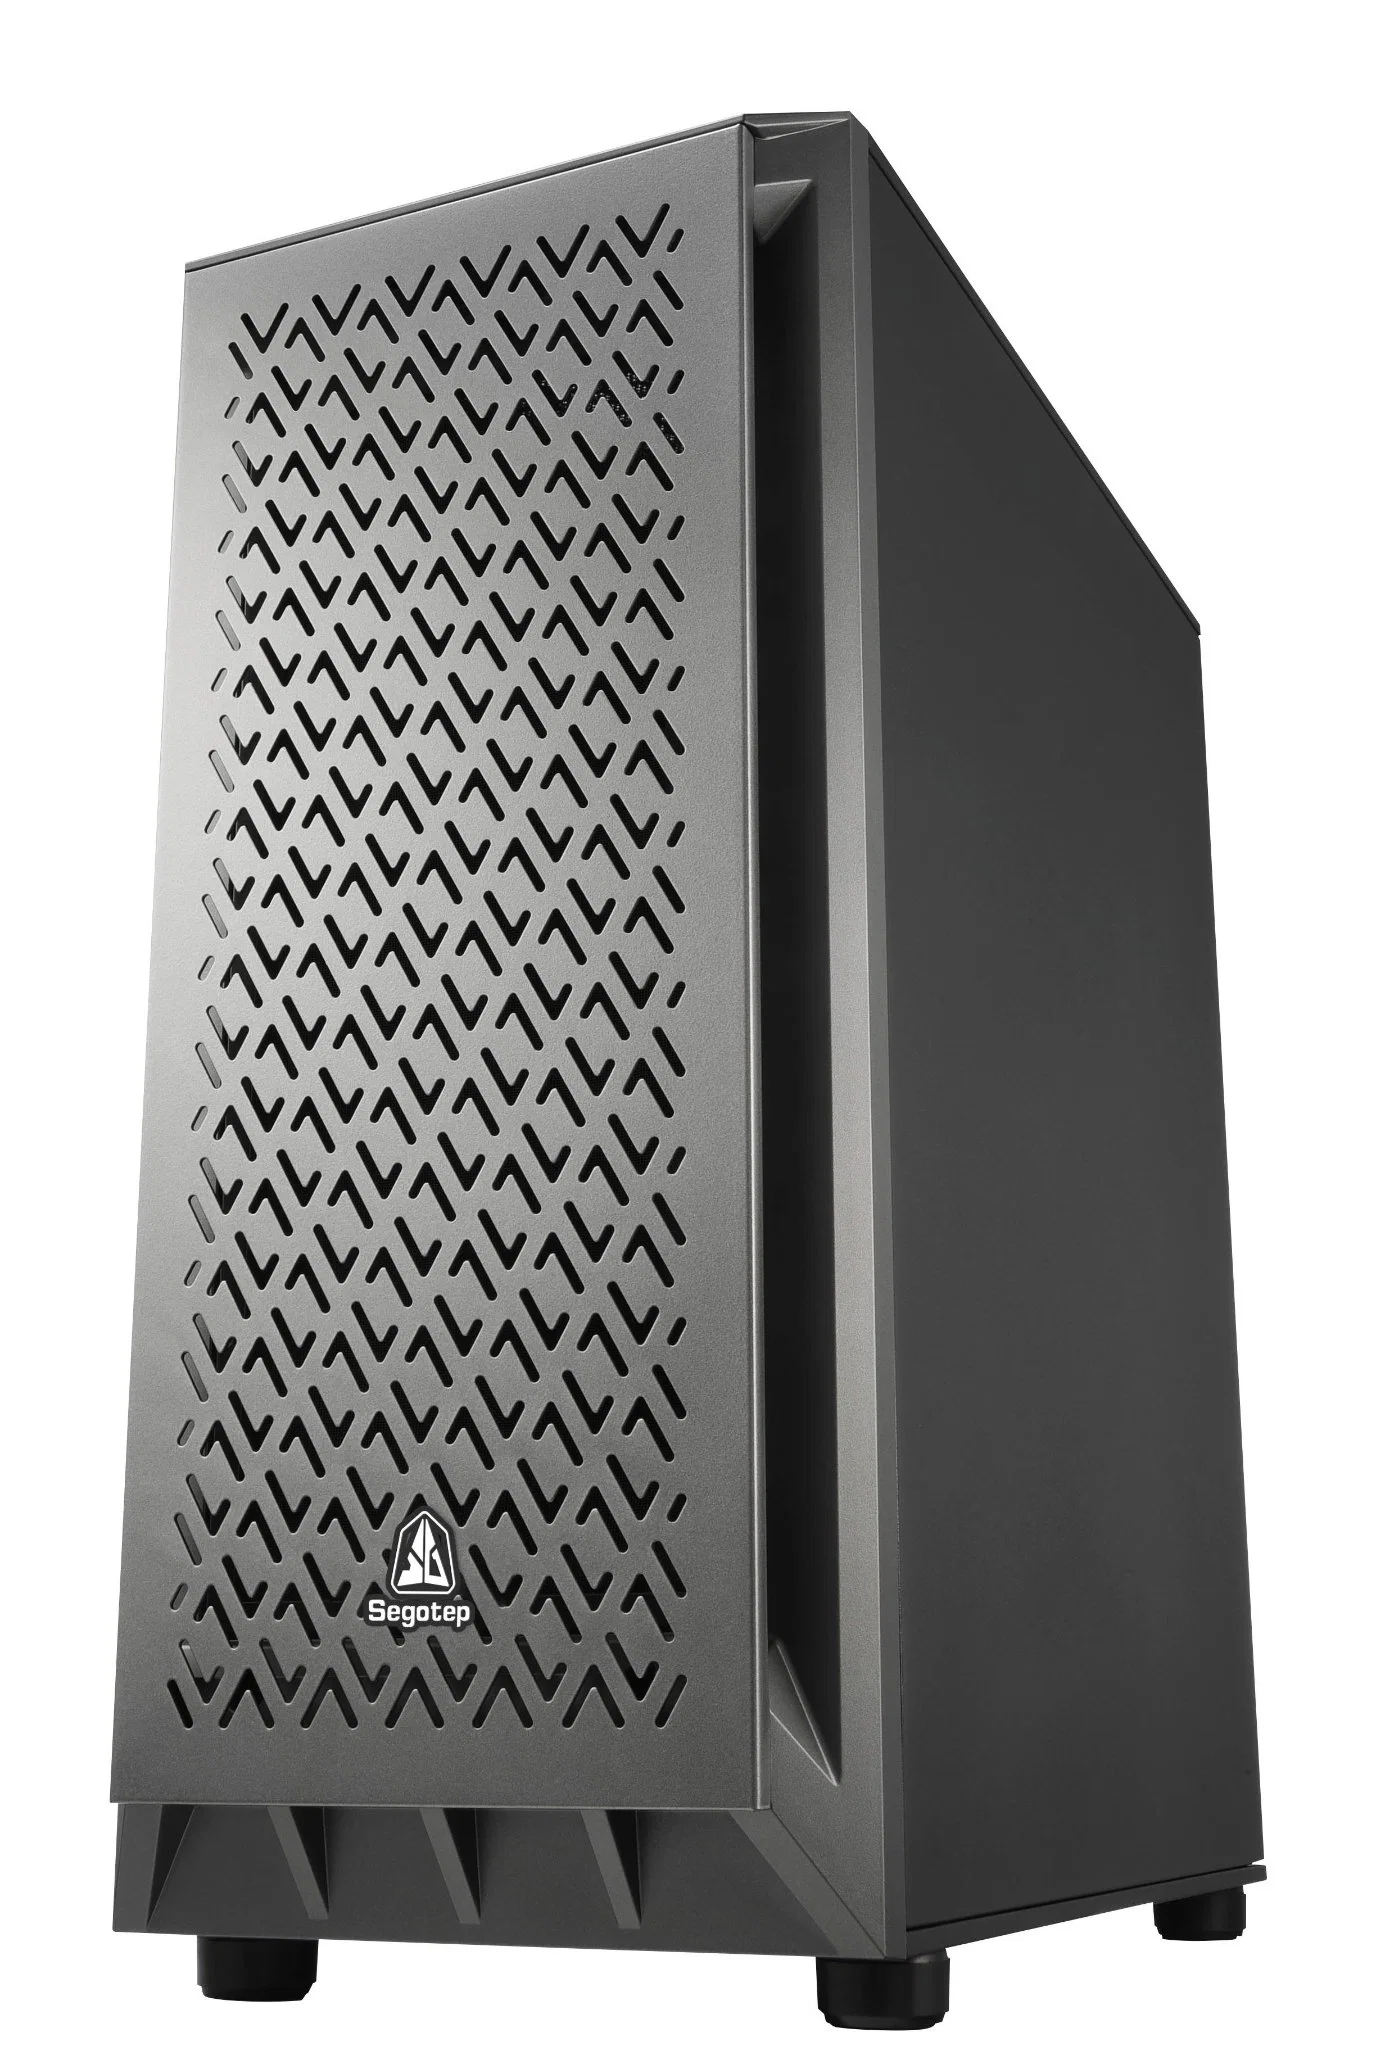 Segotep Gank 2, New Arrvial Liquid Cooler ATX Gaming Computer Case PC Cases, Good Airflow Panel Design Segotp Black/White Case